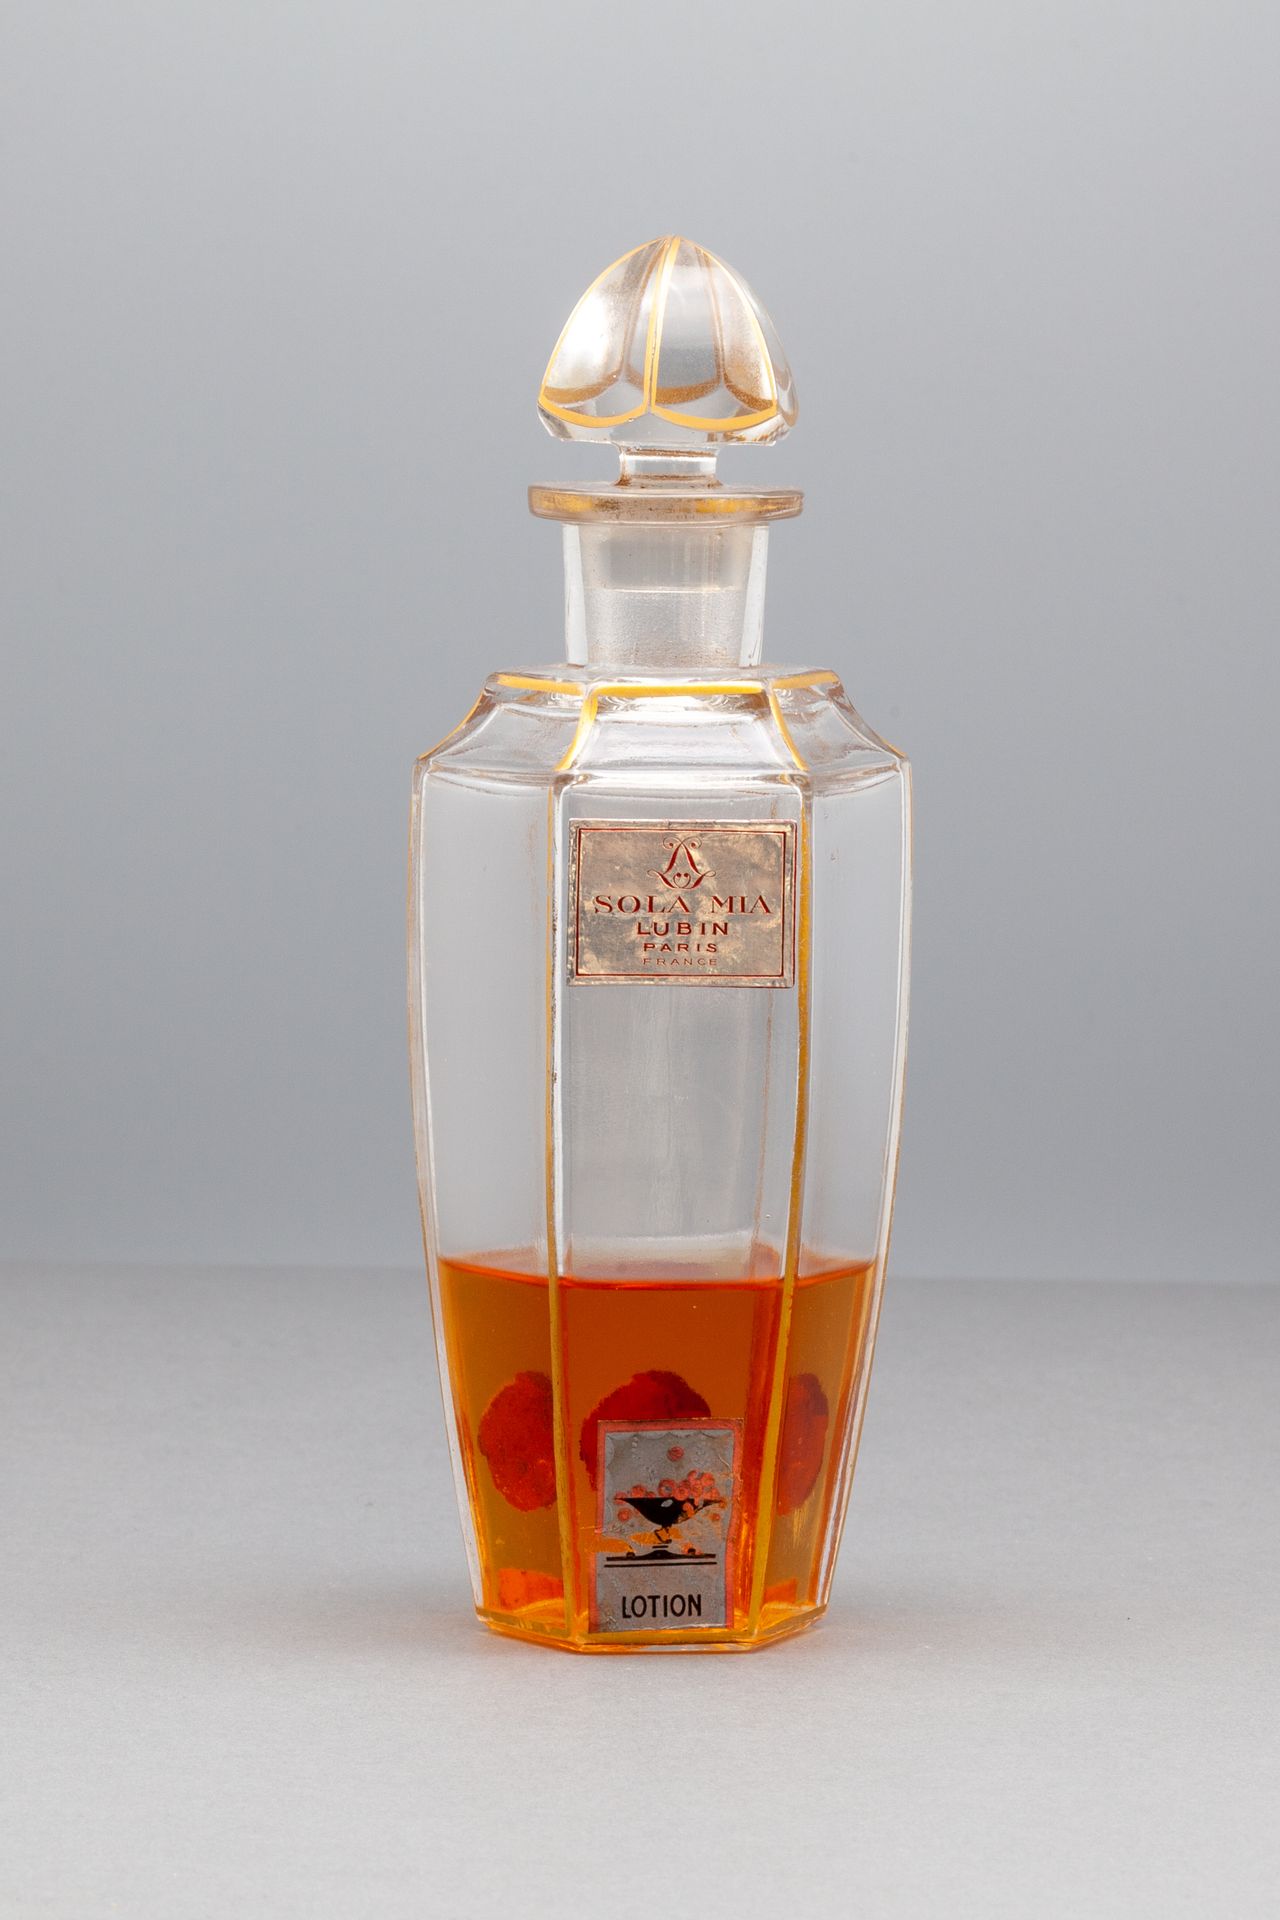 LUBIN "SOLA MIA" 玻璃瓶，侧面有切口，金色装饰。标签上有说明和标题。